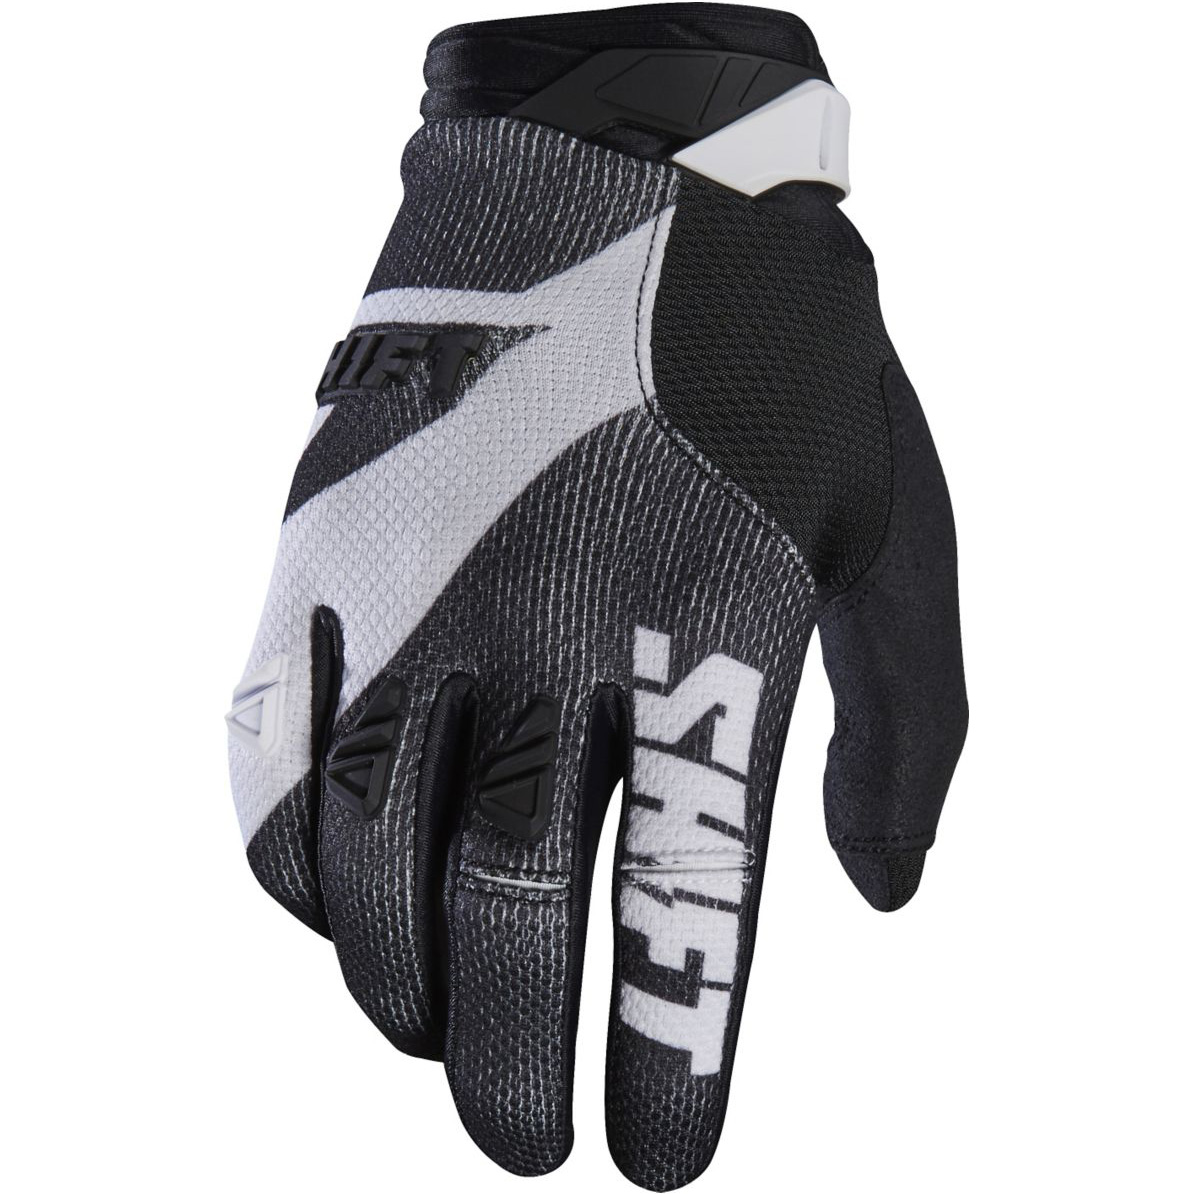 Shift - 2017 3LACK PRO Mainline перчатки, черно-белые